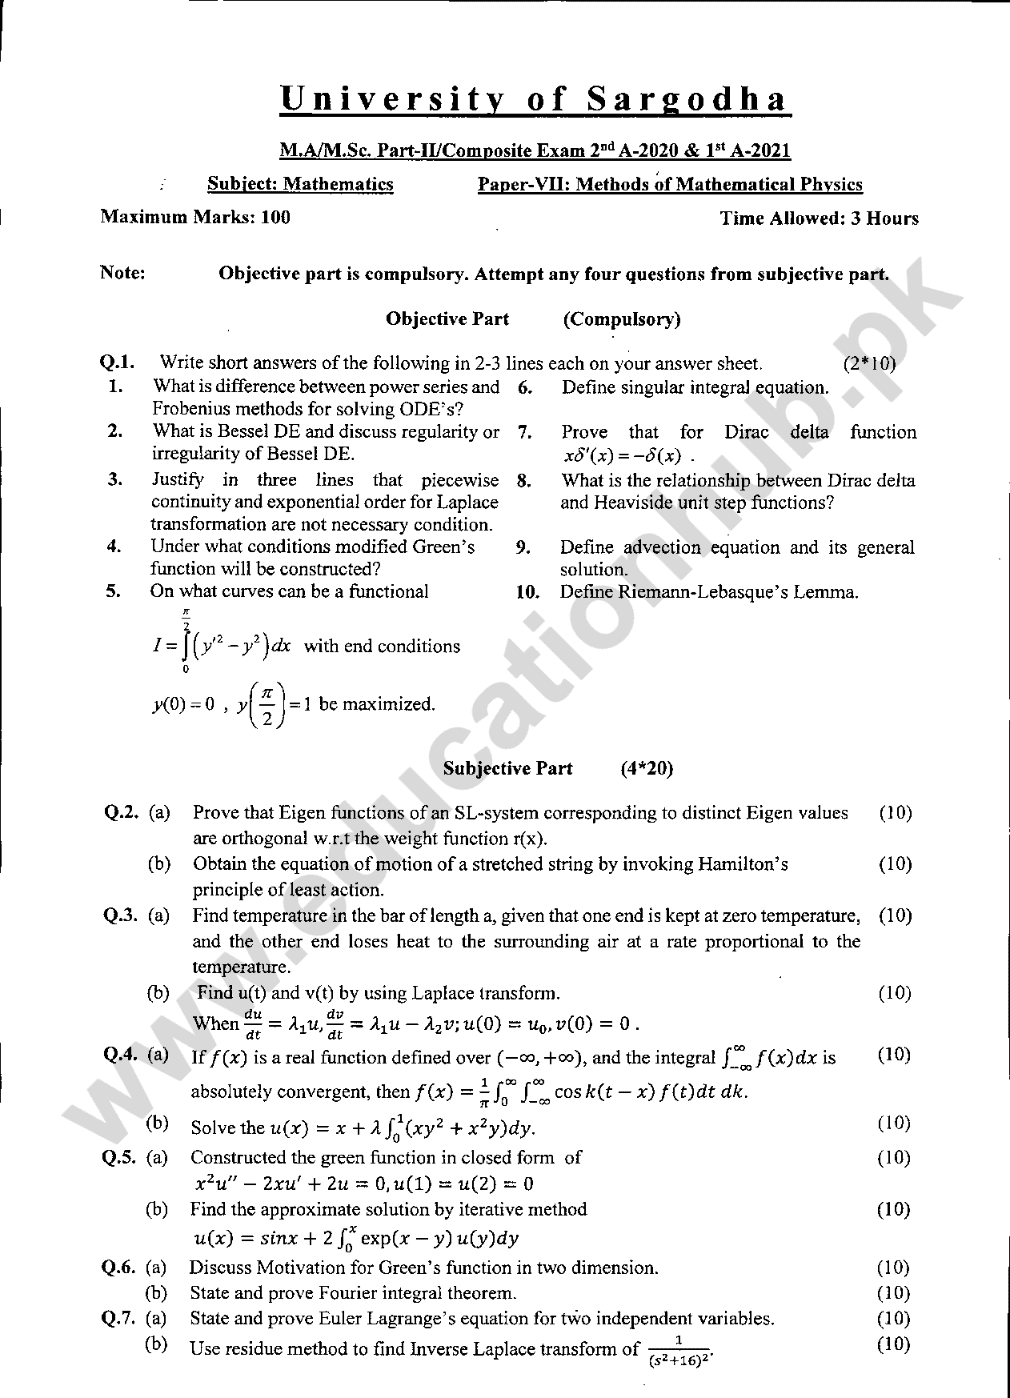 Paper 7 MA Math-2 UOS 1-A-2021